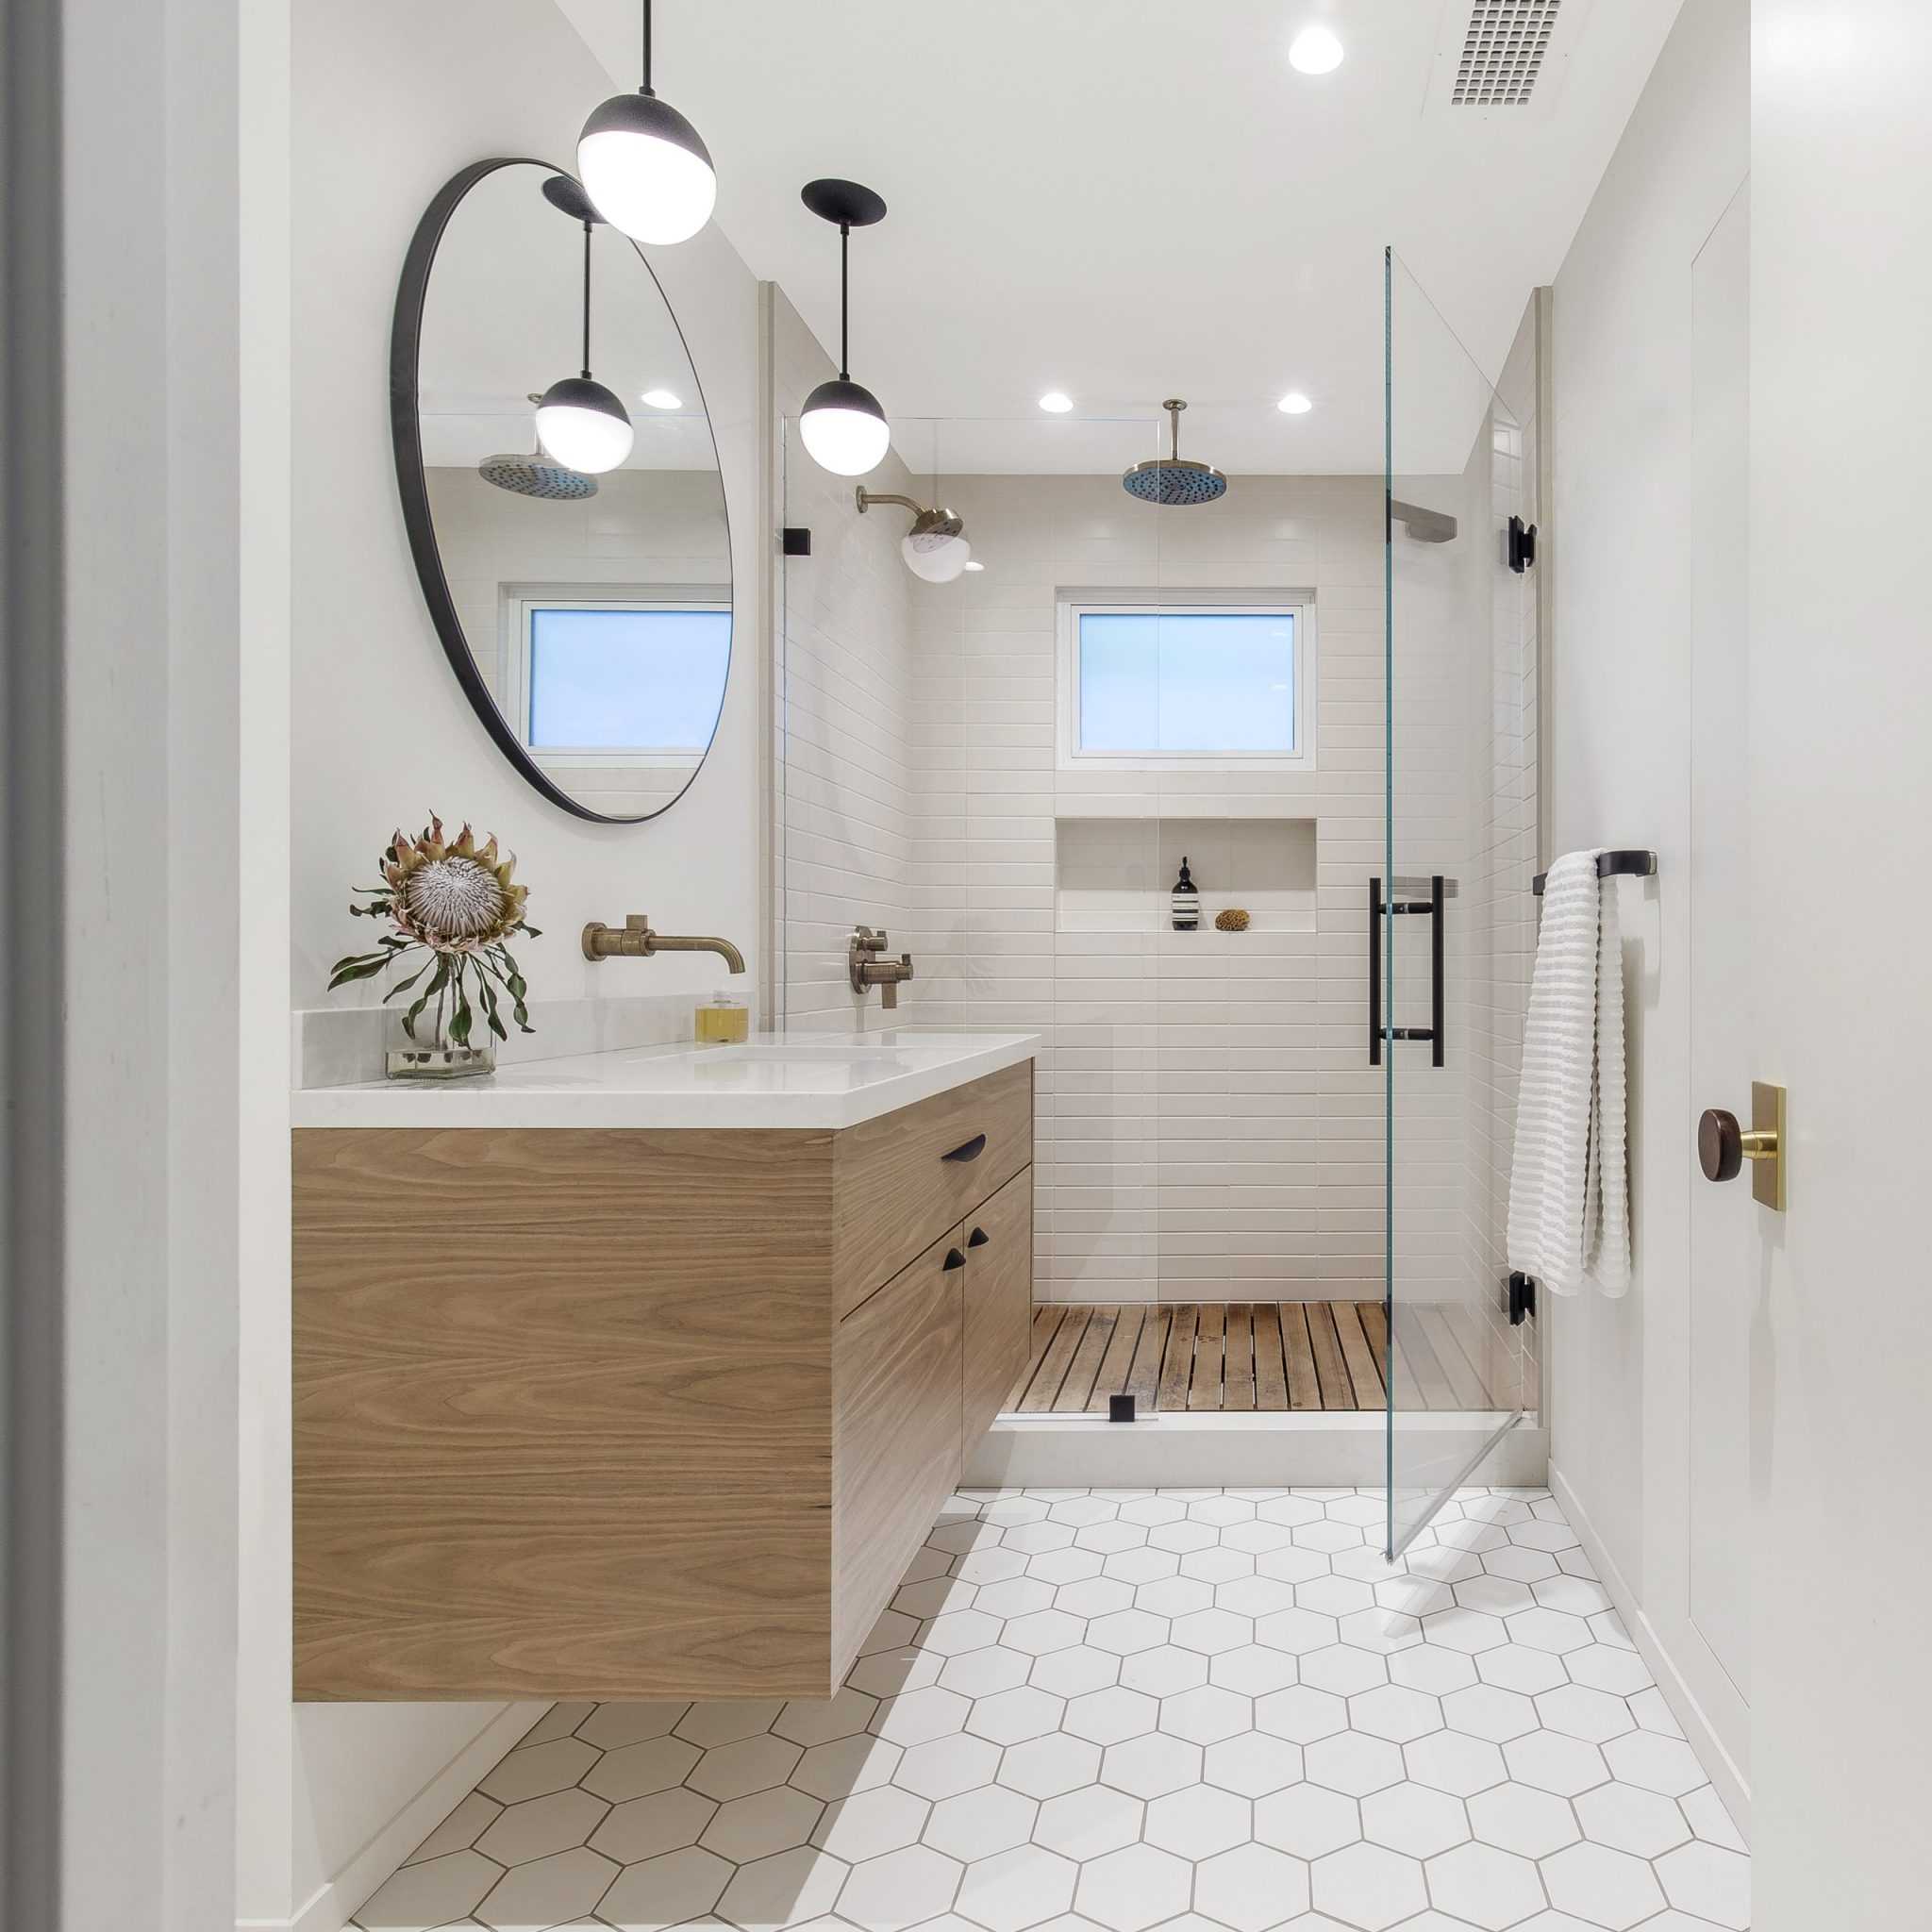 20 Impressive Mid Century Modern Bathroom Designs You Must See 3 2048x2048 